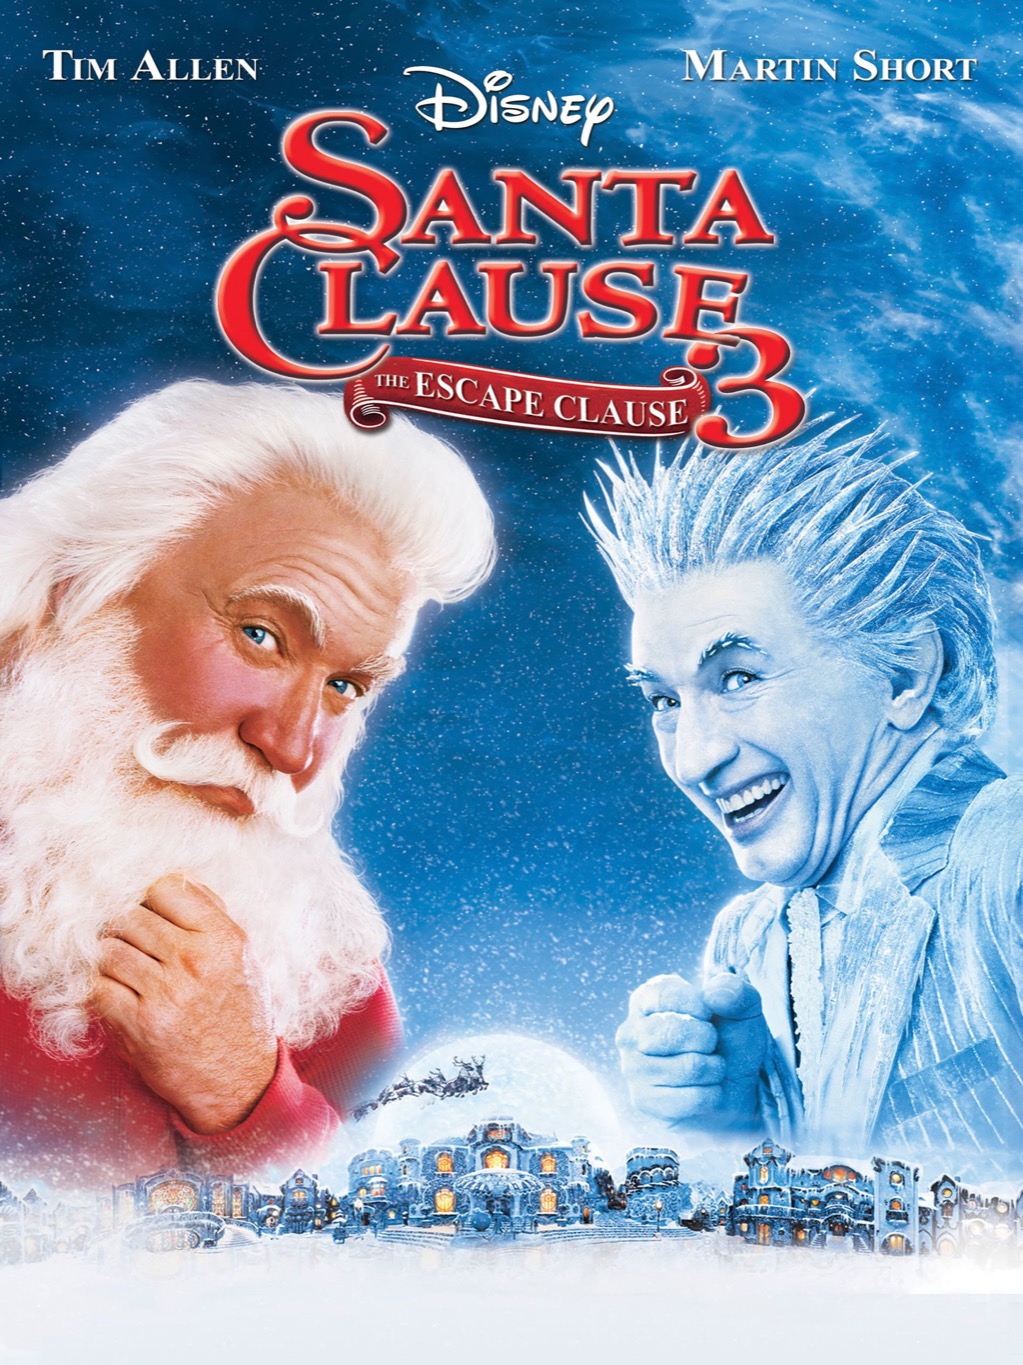 the santa clause 3 is a bad xmas movie